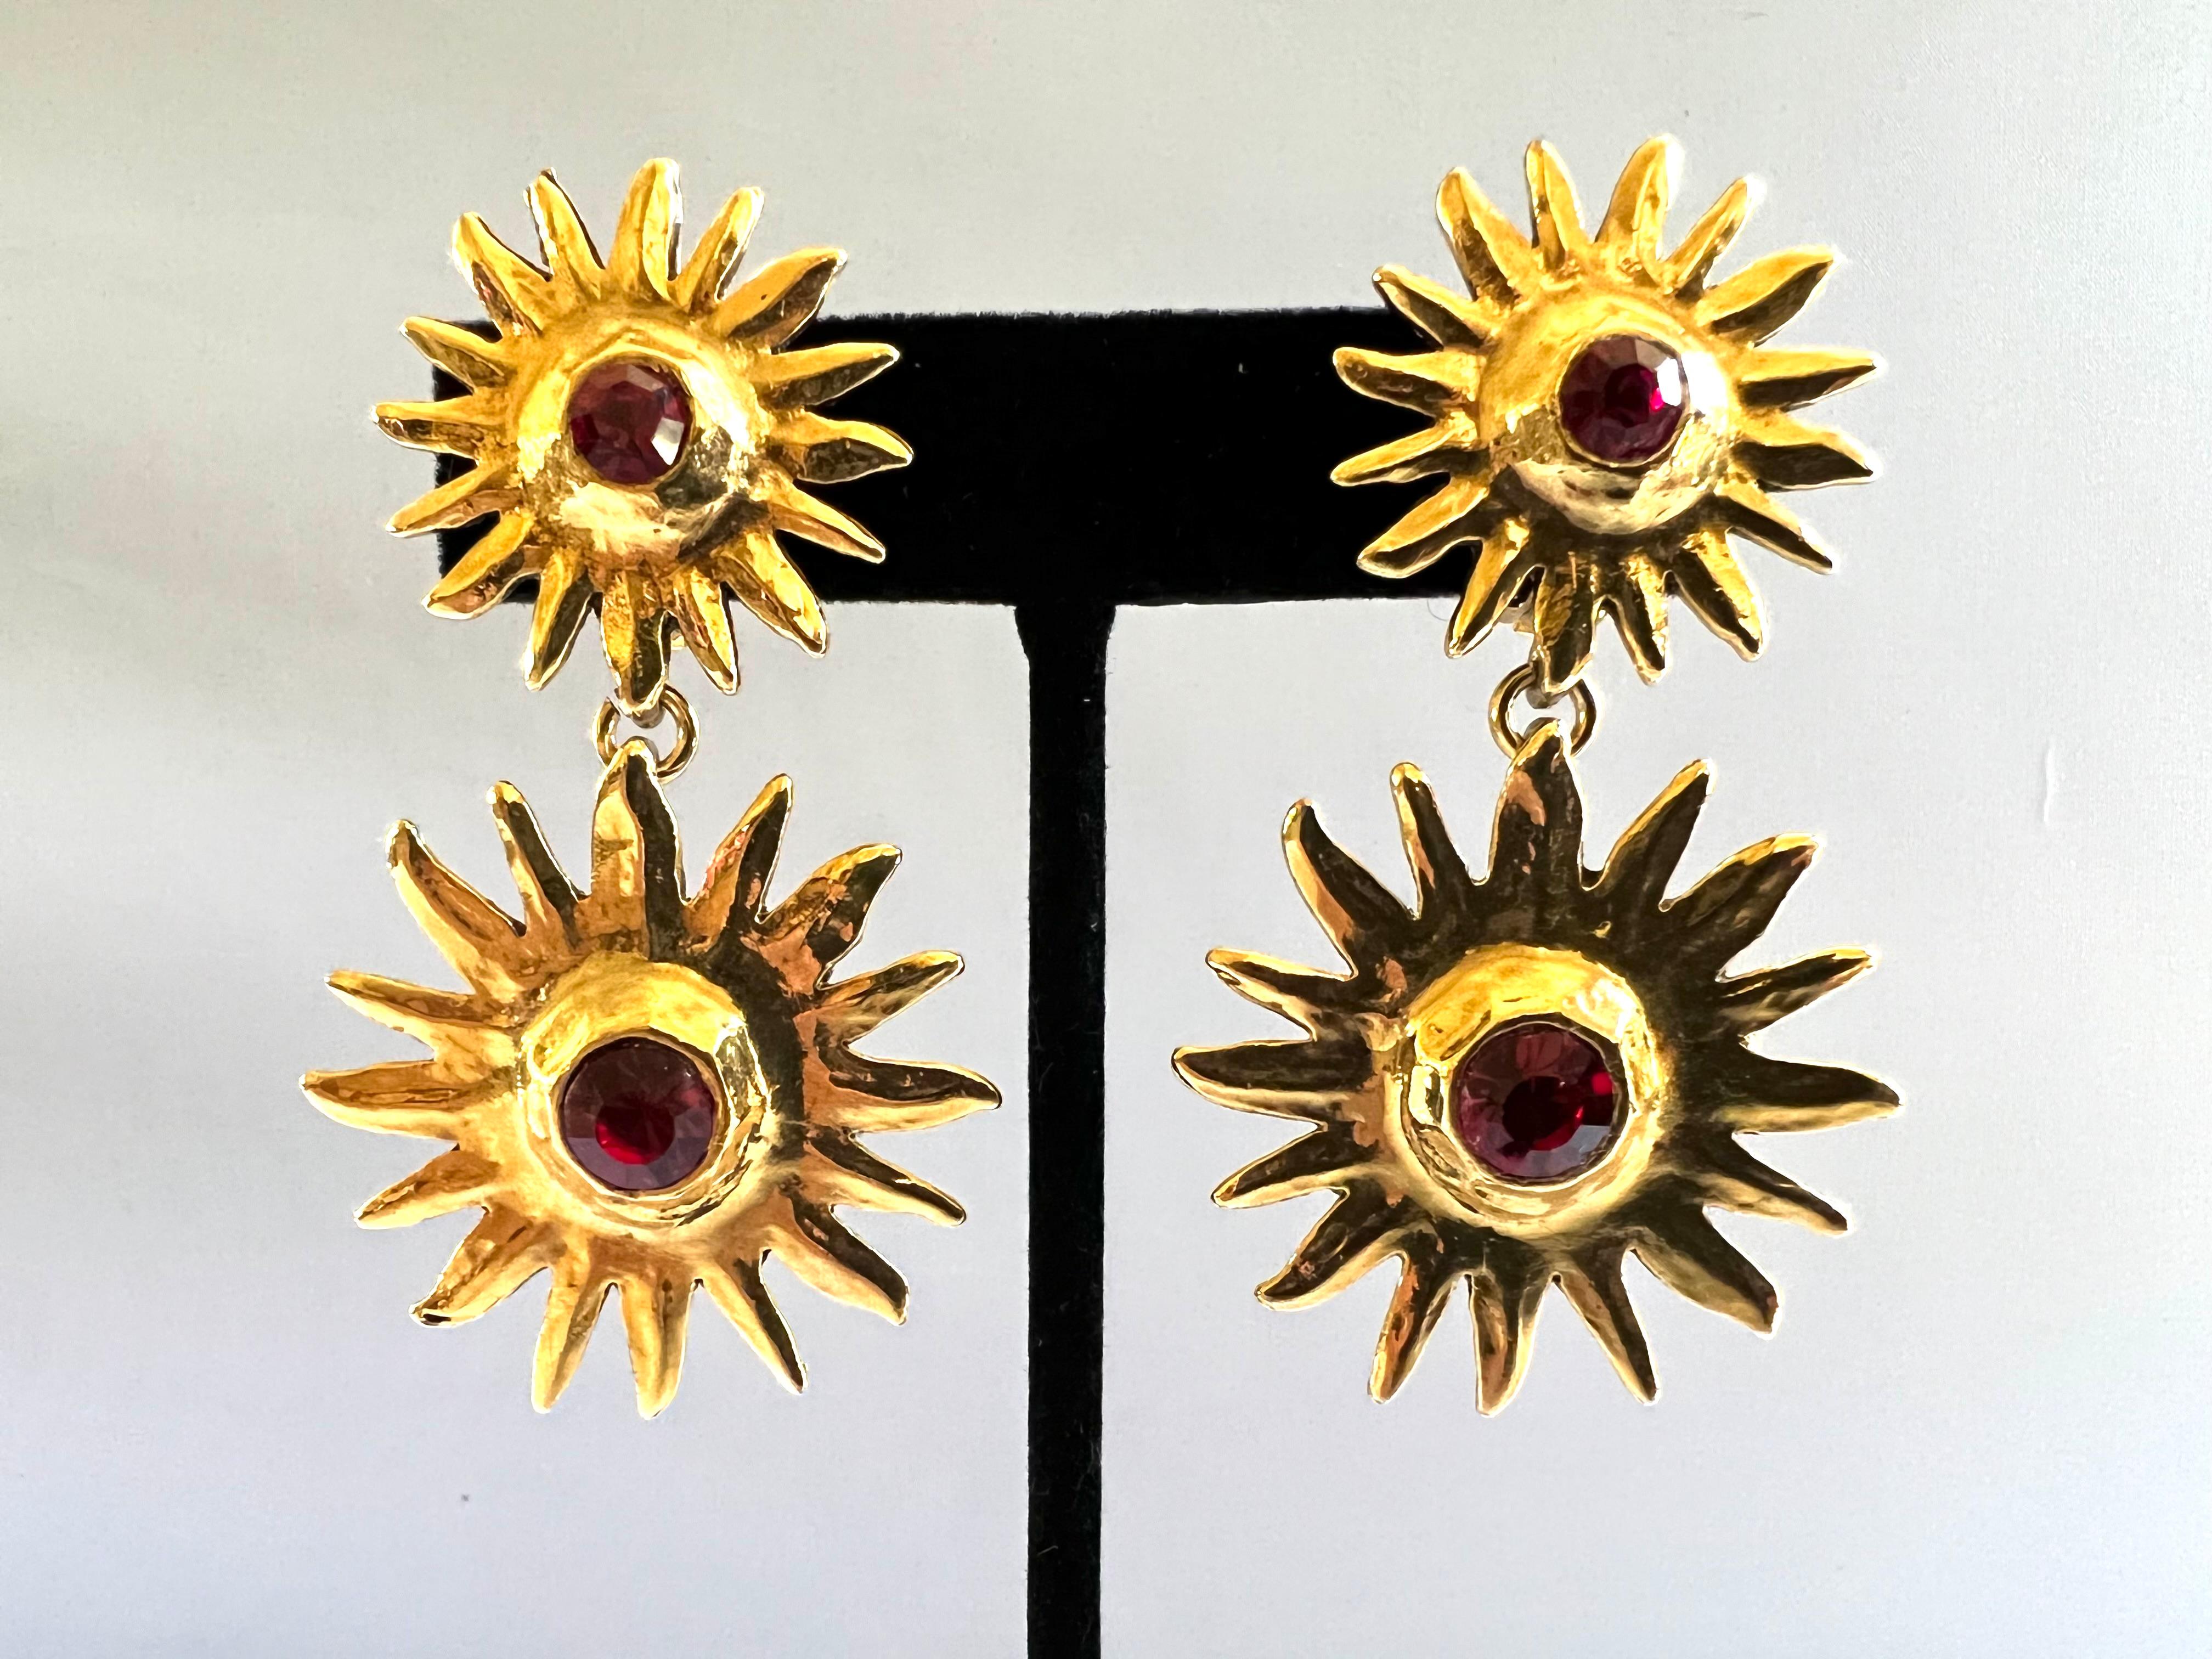 Vintage Yves Saint Laurent gilt metal sun earrings with red accents by Maison Robert Goossens for Yves Saint Laurent.